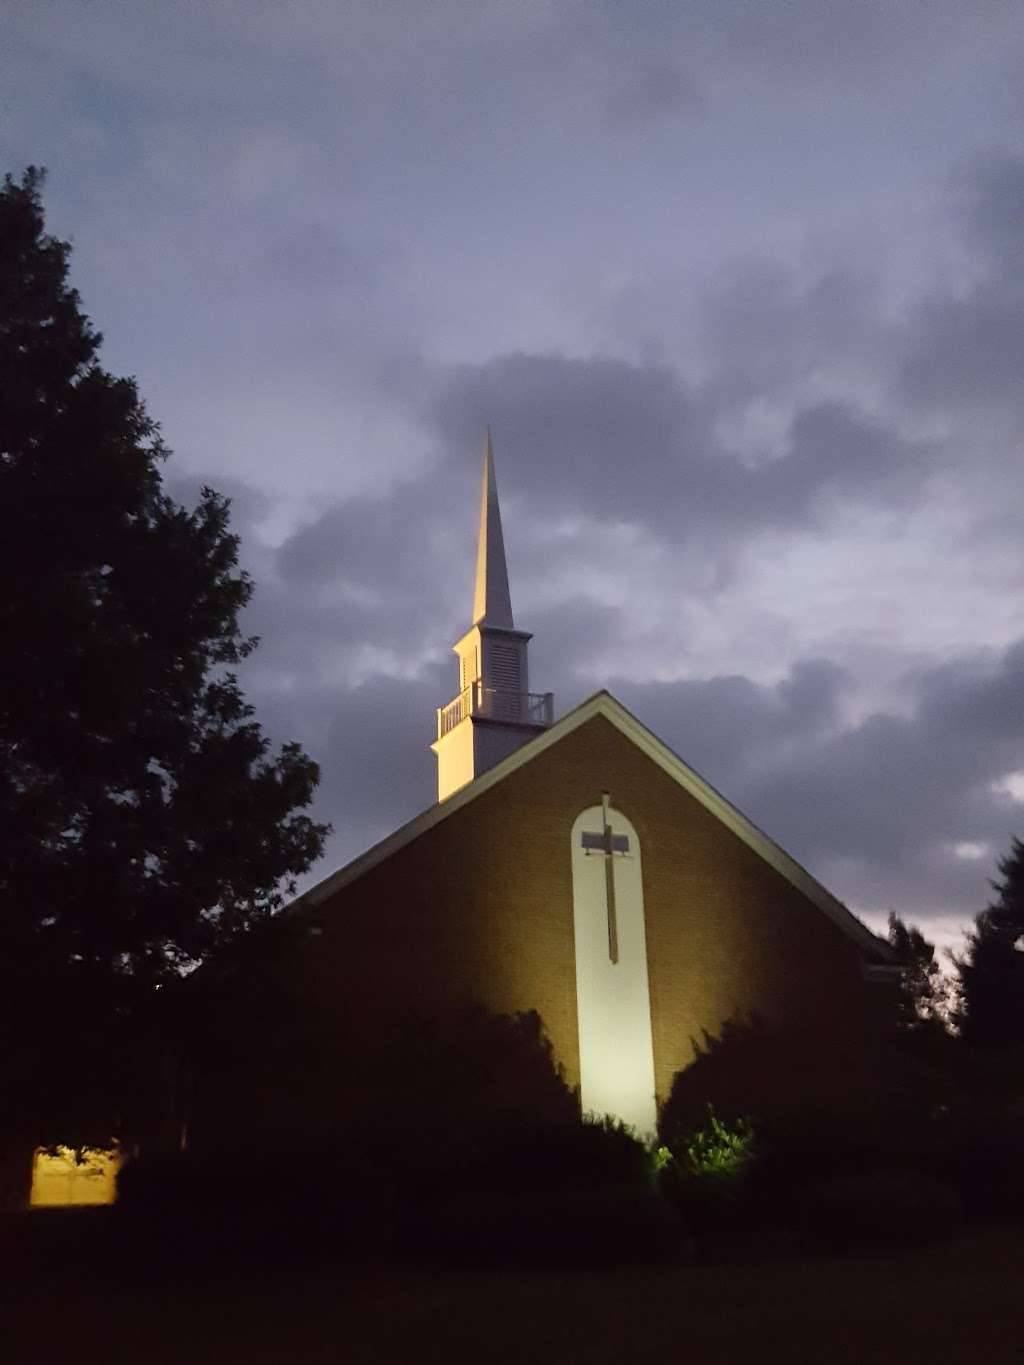 Warrenton United Methodist Church & Preschool | 341 Church St, Warrenton, VA 20186, USA | Phone: (540) 347-1367